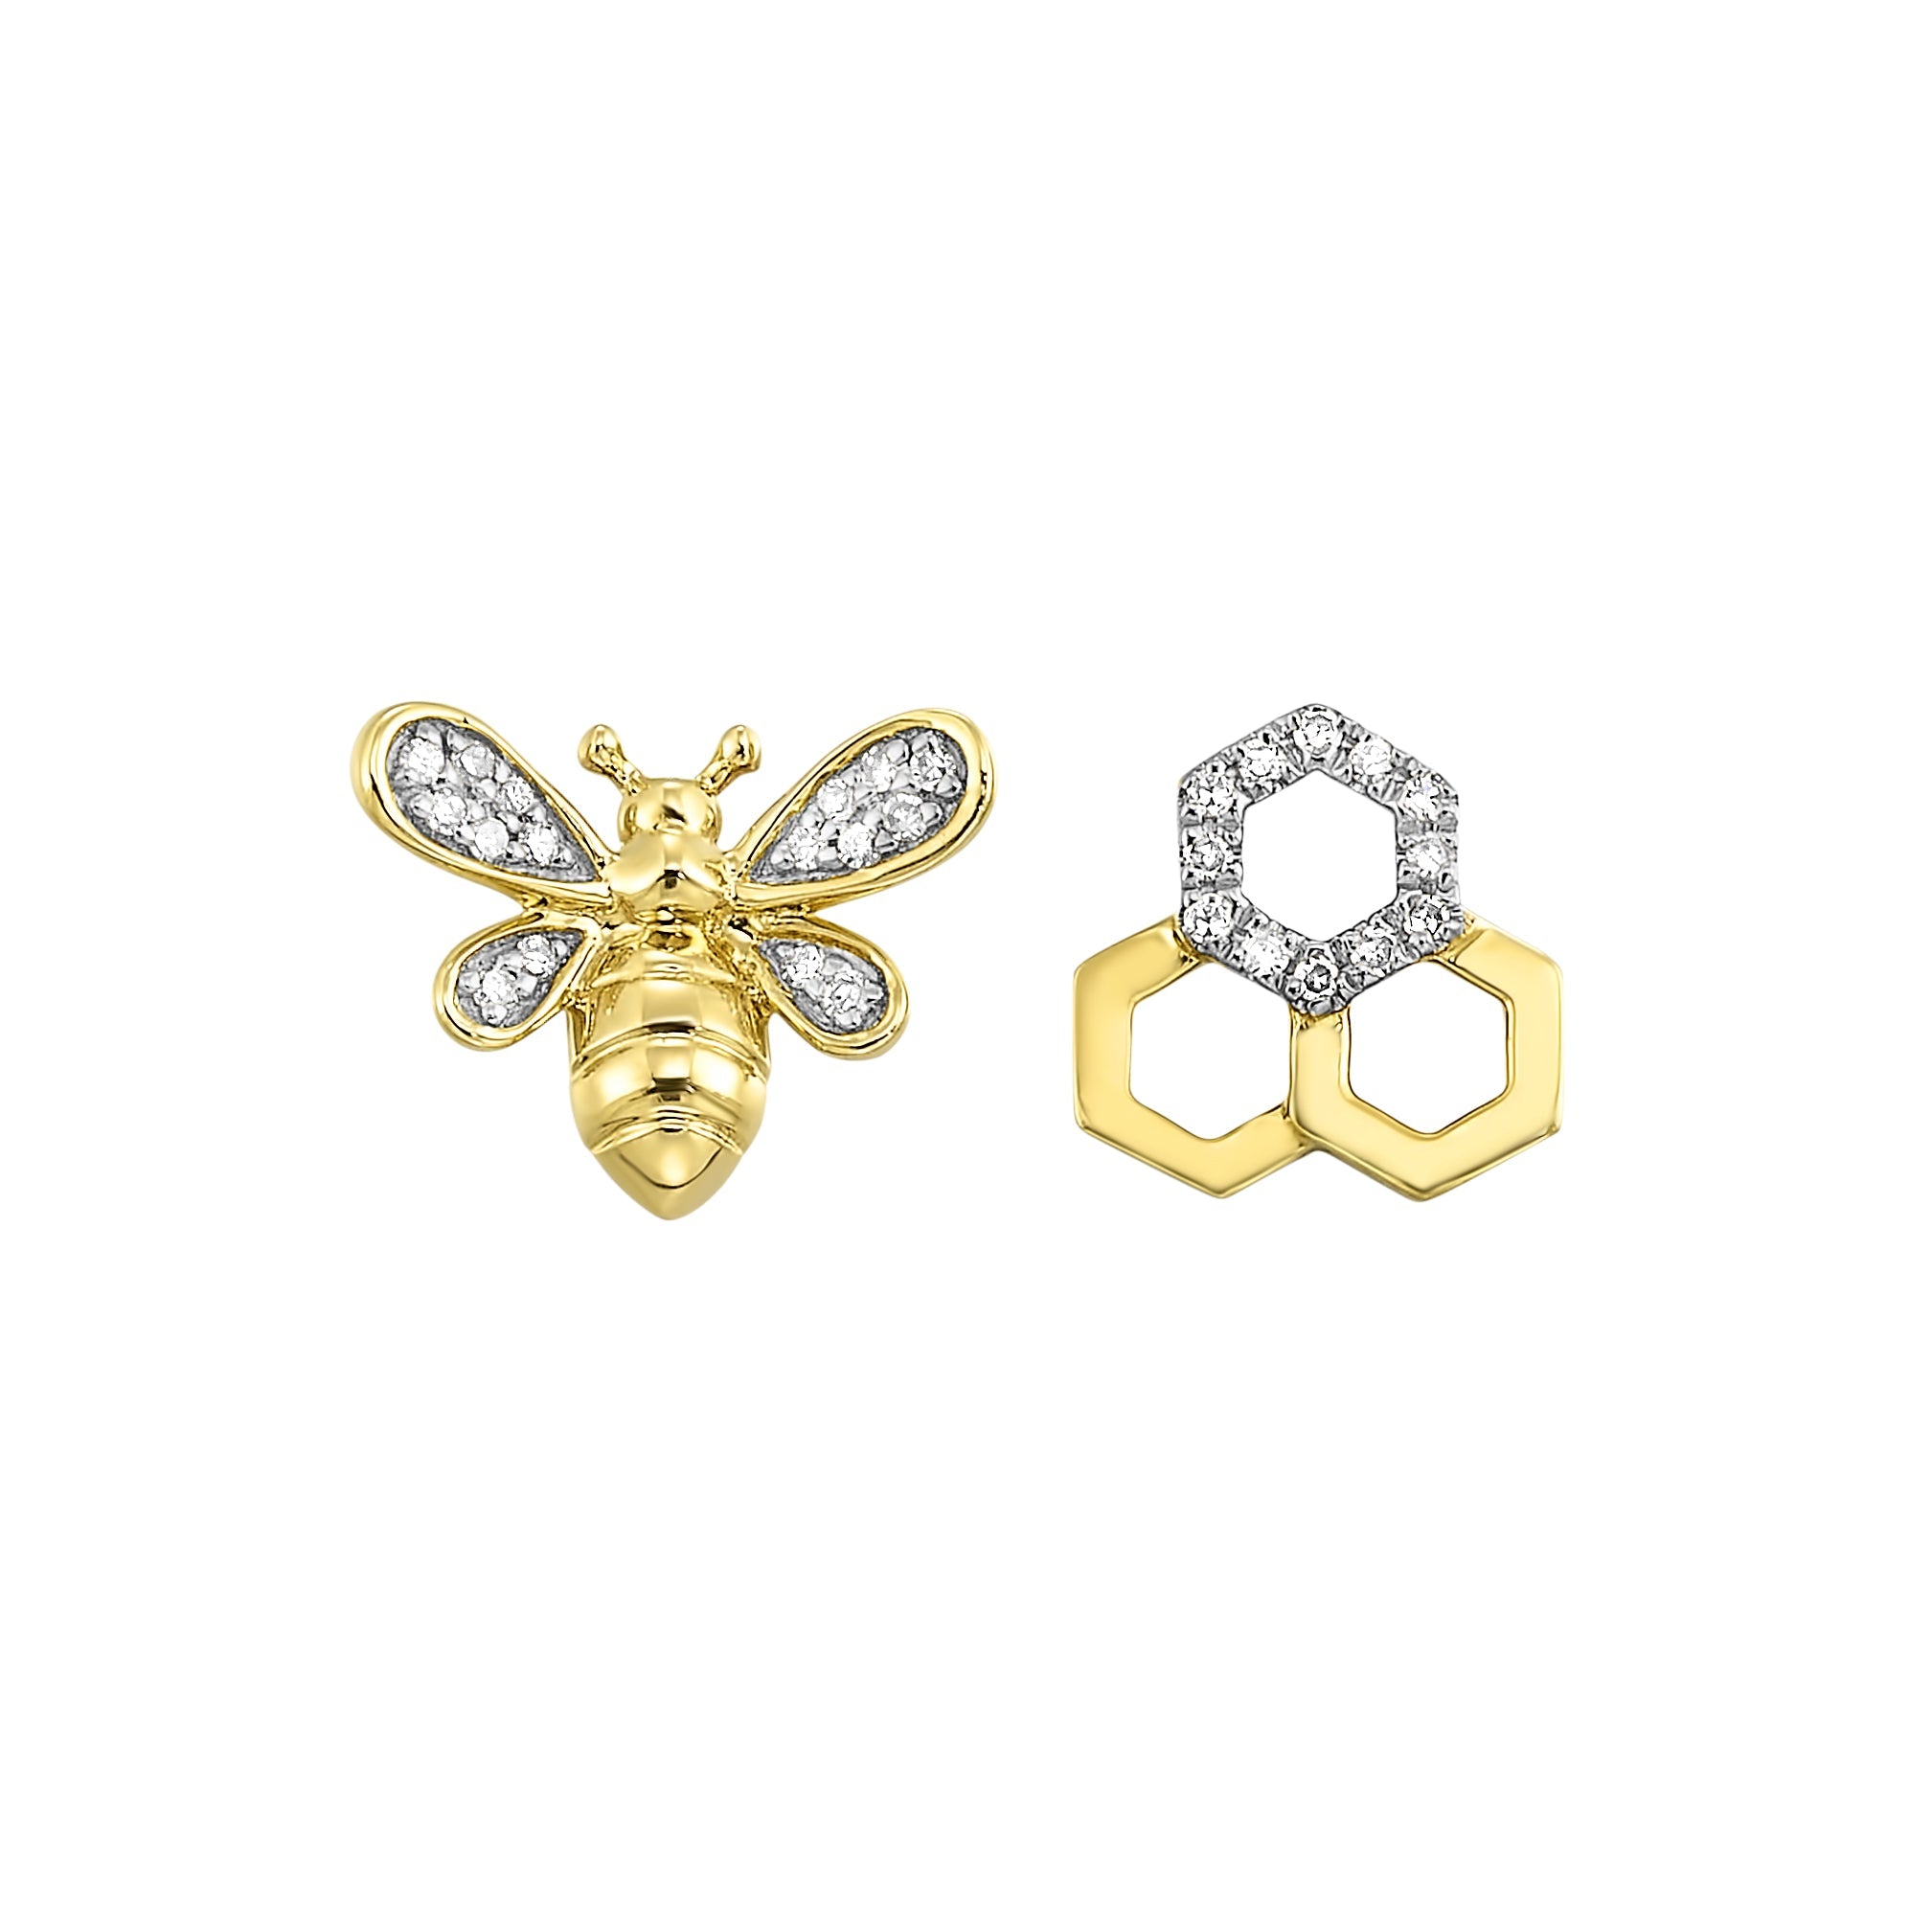 10kt yellow gold diamond 1/20ctw earring